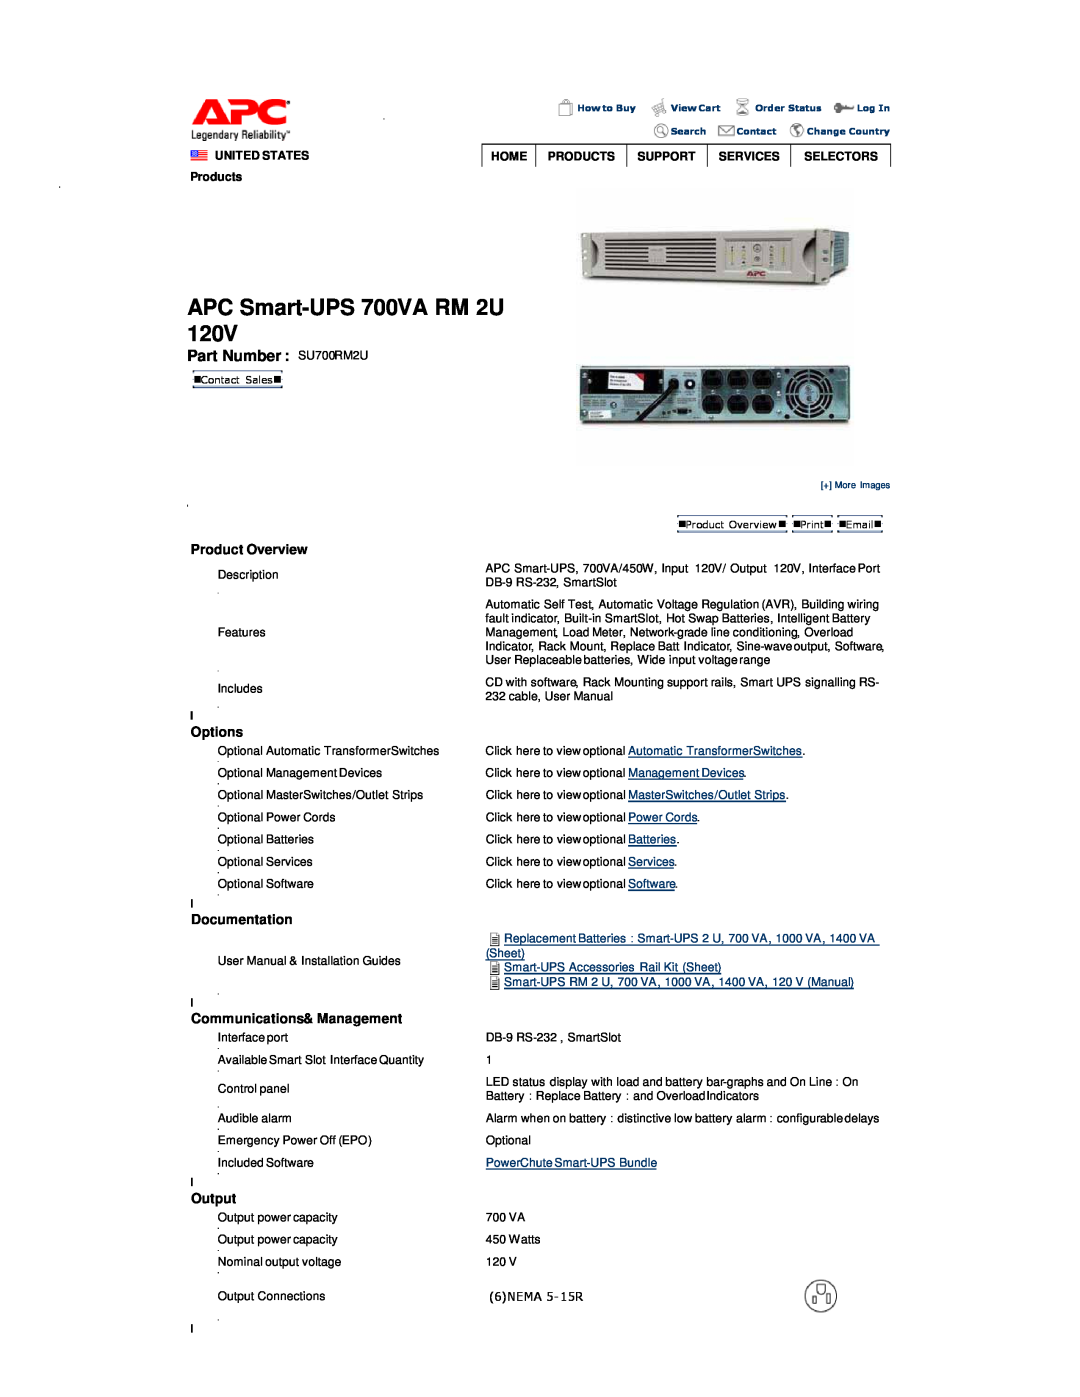 APC manual Battery Replacement Procedure, SURM2U Replacement Battery Cartridge installation Guide, Smart-UPS Model 